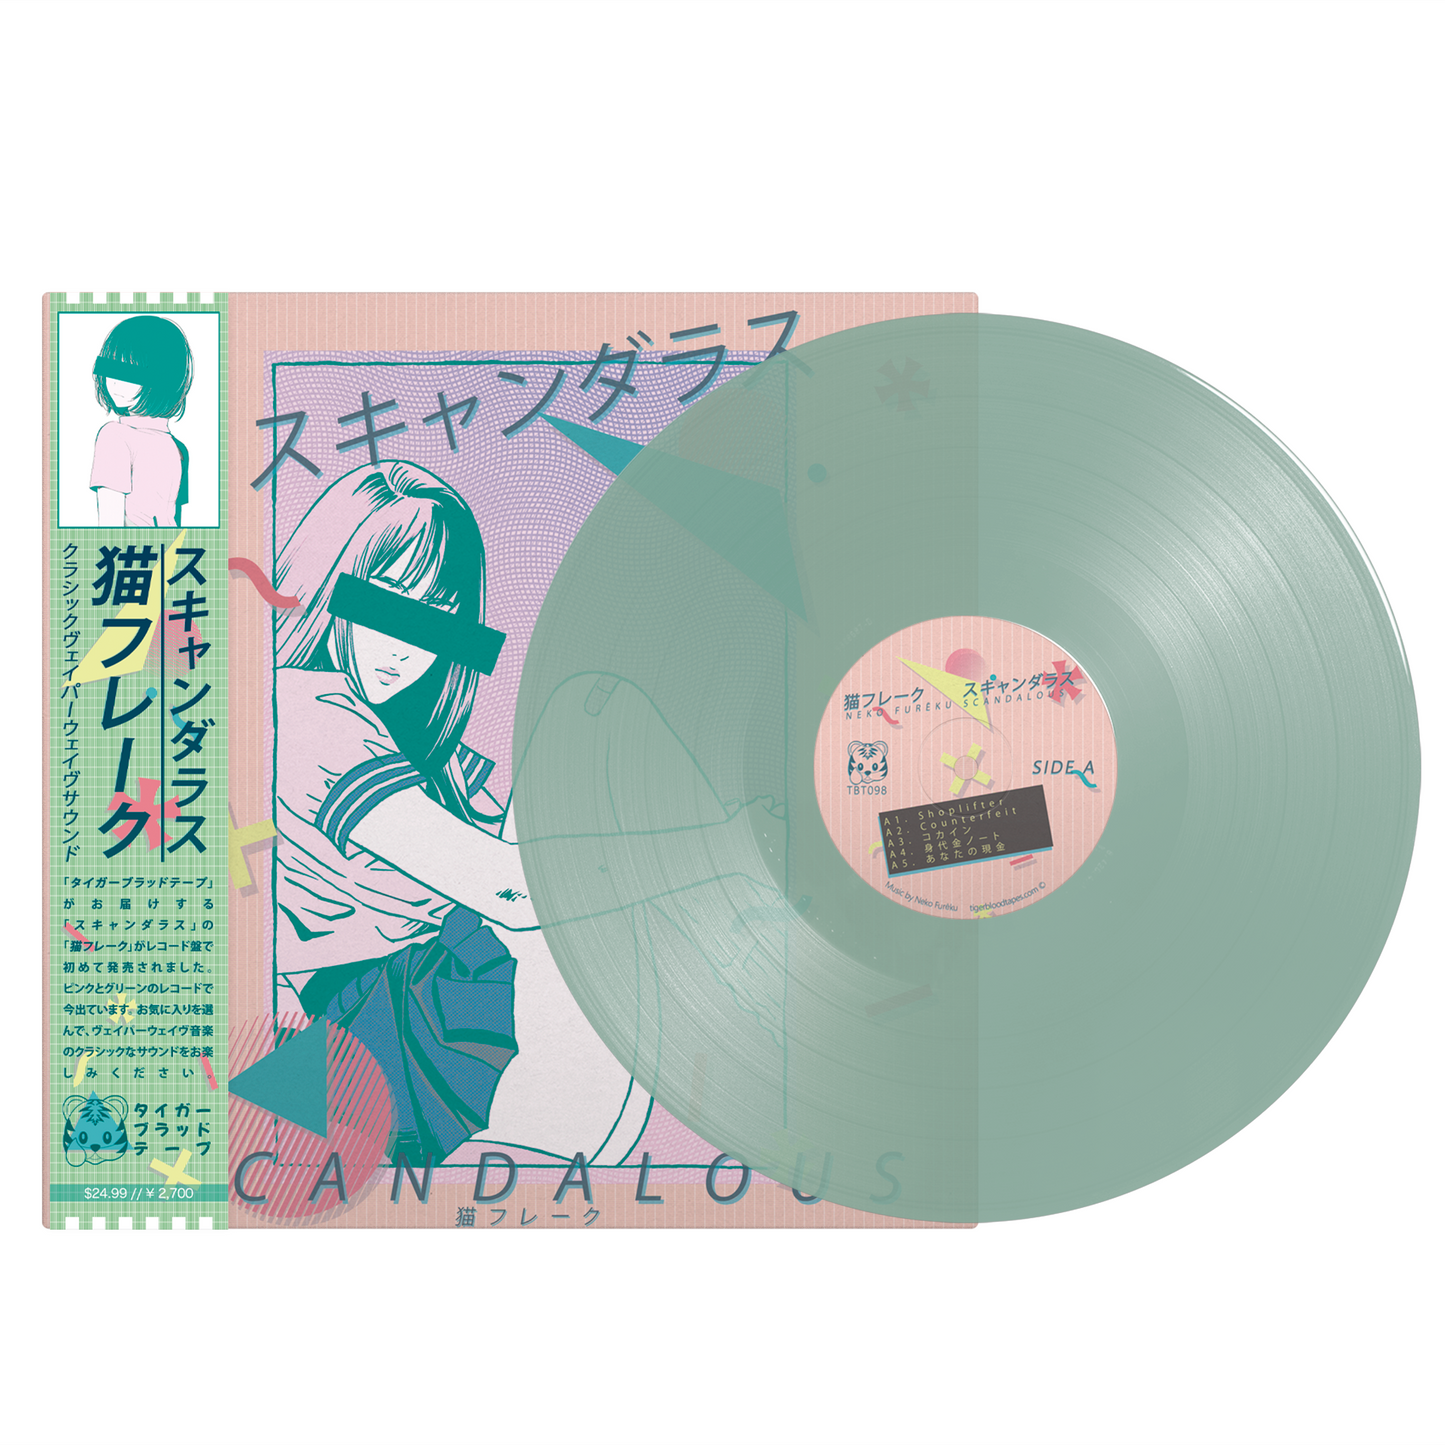 Neko Furēku - "scandalous スキャンダラス" Limited Edition 12" Vinyl LP